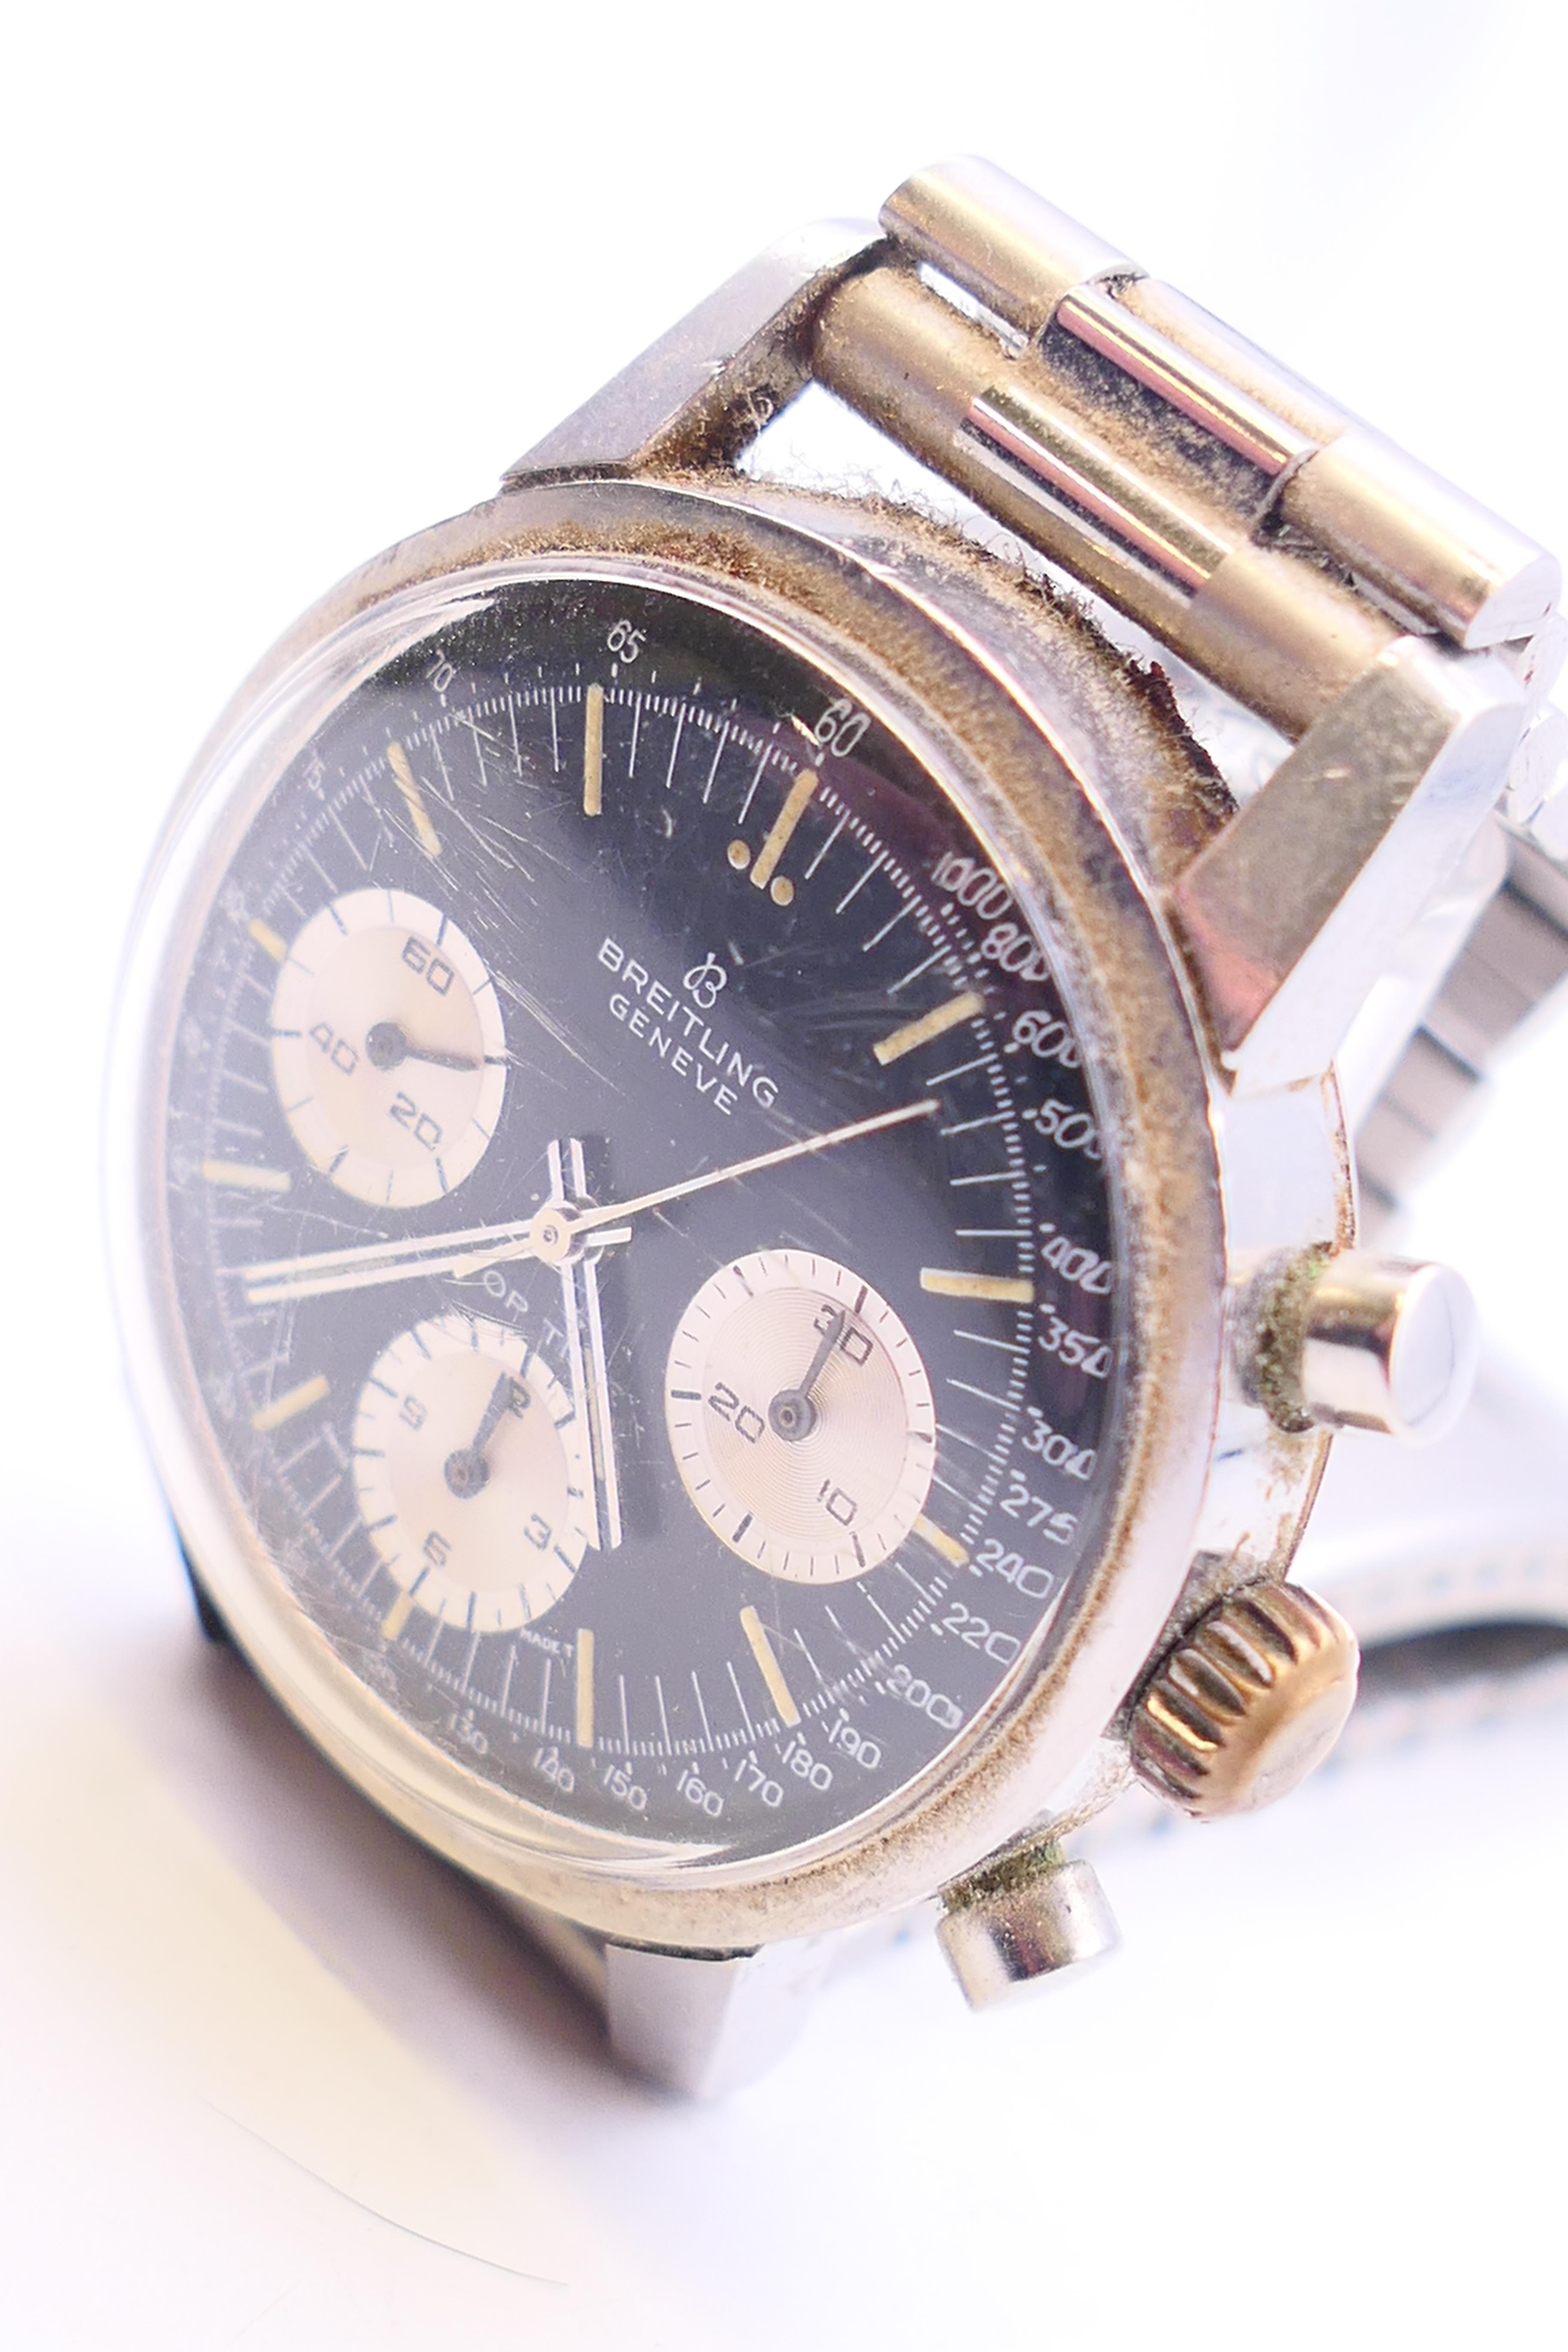 A Breitling Top Time gentleman's wristwatch. 4 cm diameter. - Image 9 of 10